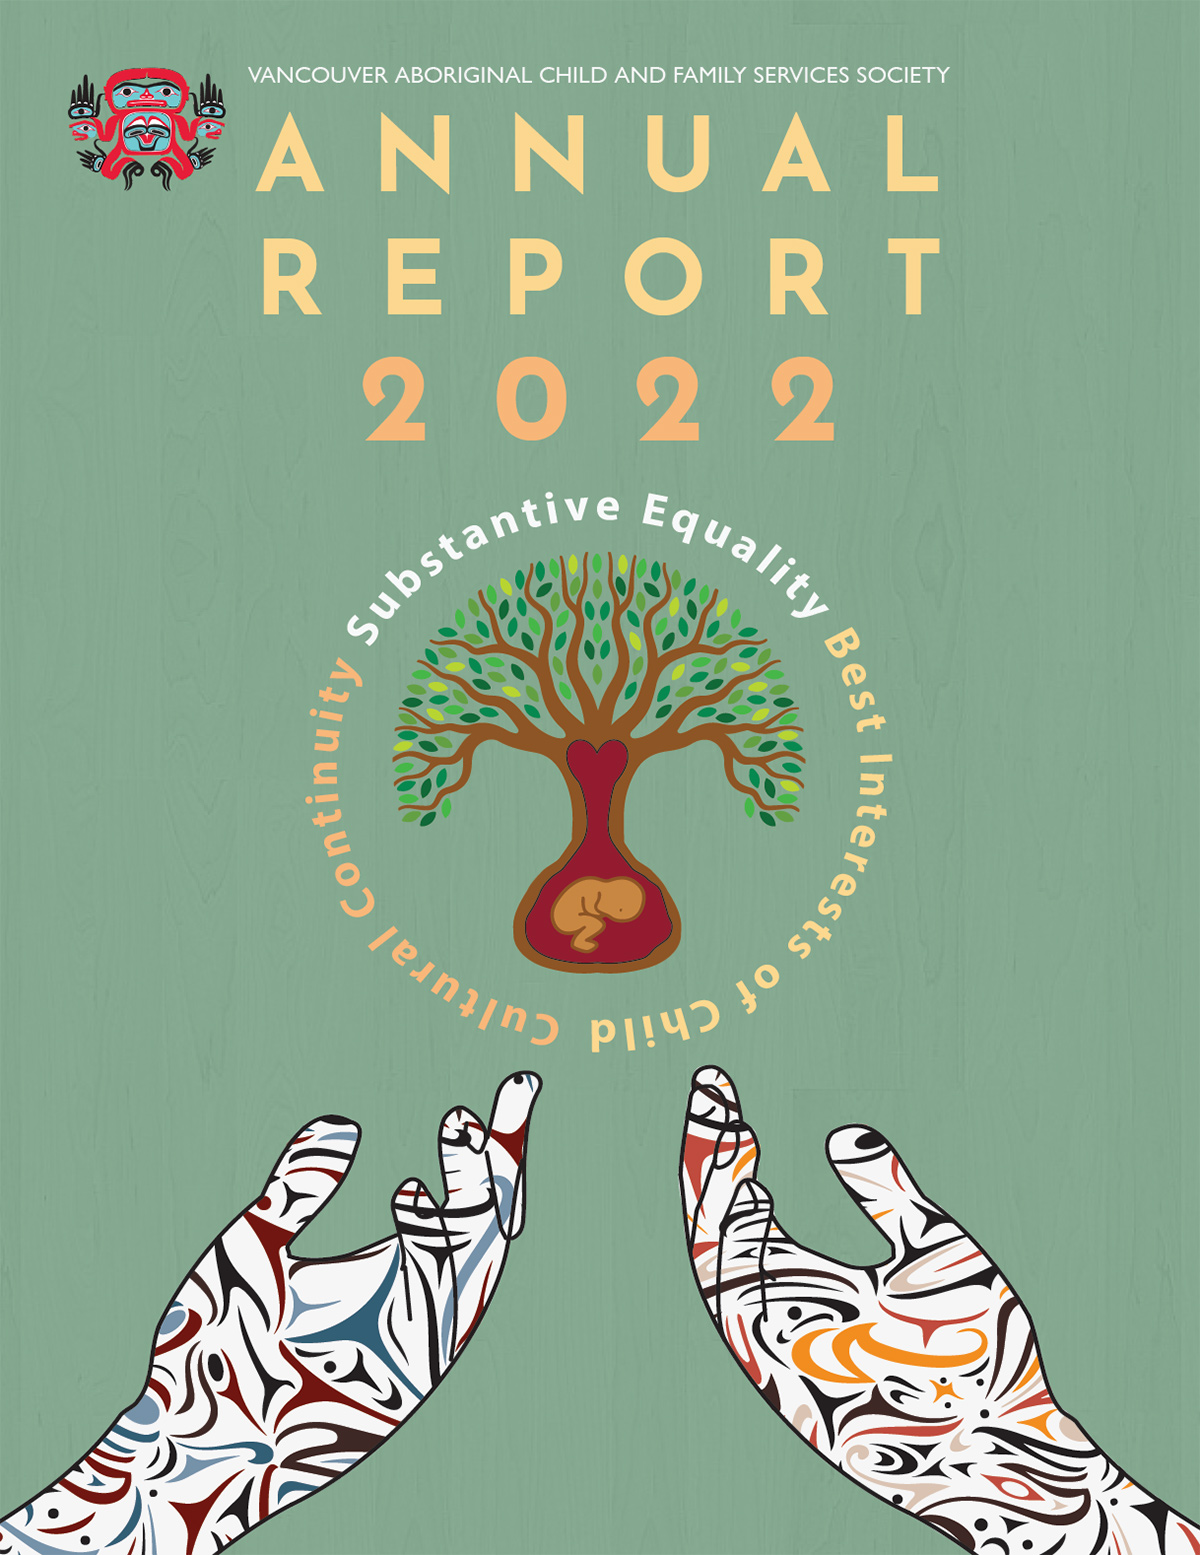 https://www.vacfss.com/wp-content/uploads/2022/07/2022-annual-report-cover.jpg